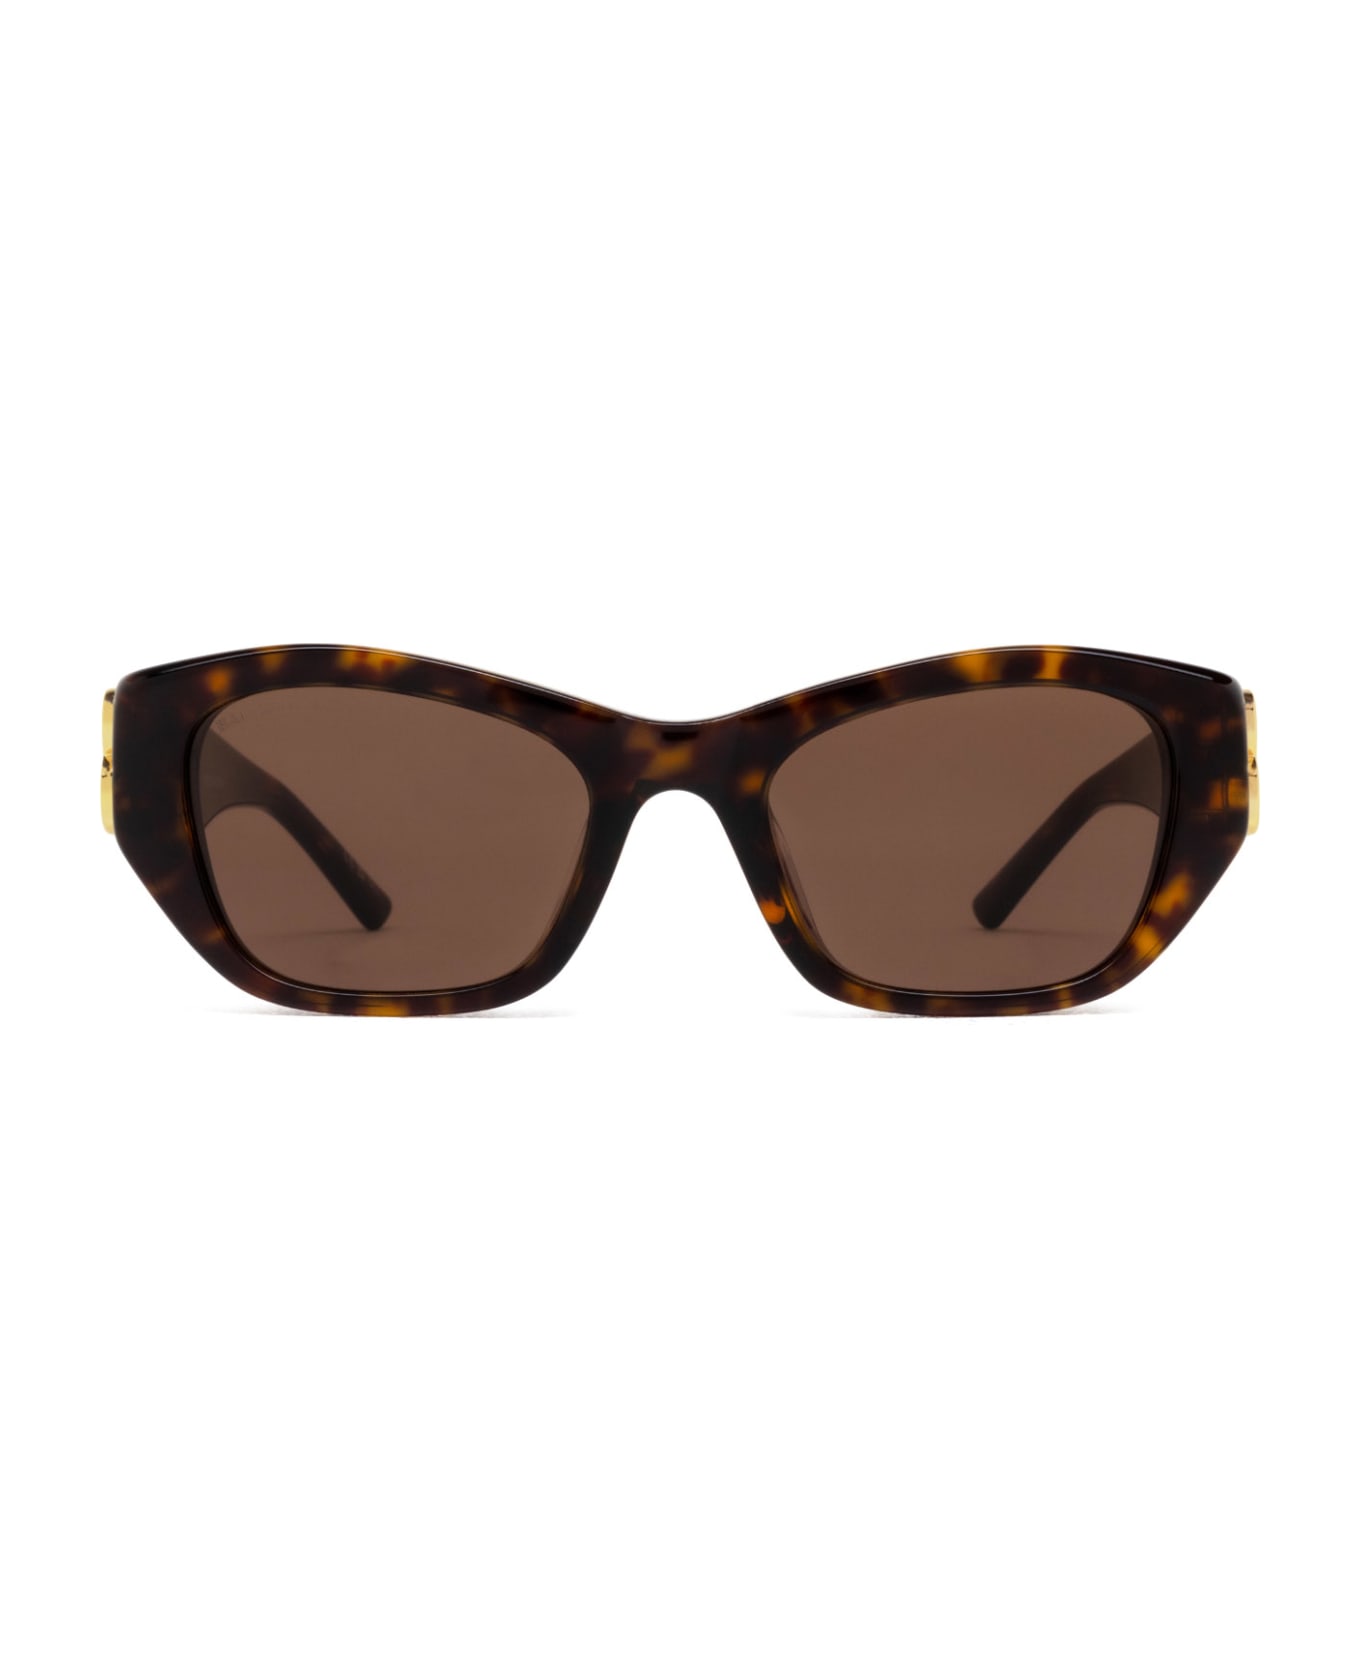 Balenciaga Eyewear Rectangular Frame Sunglasses Sunglasses - Tortoise